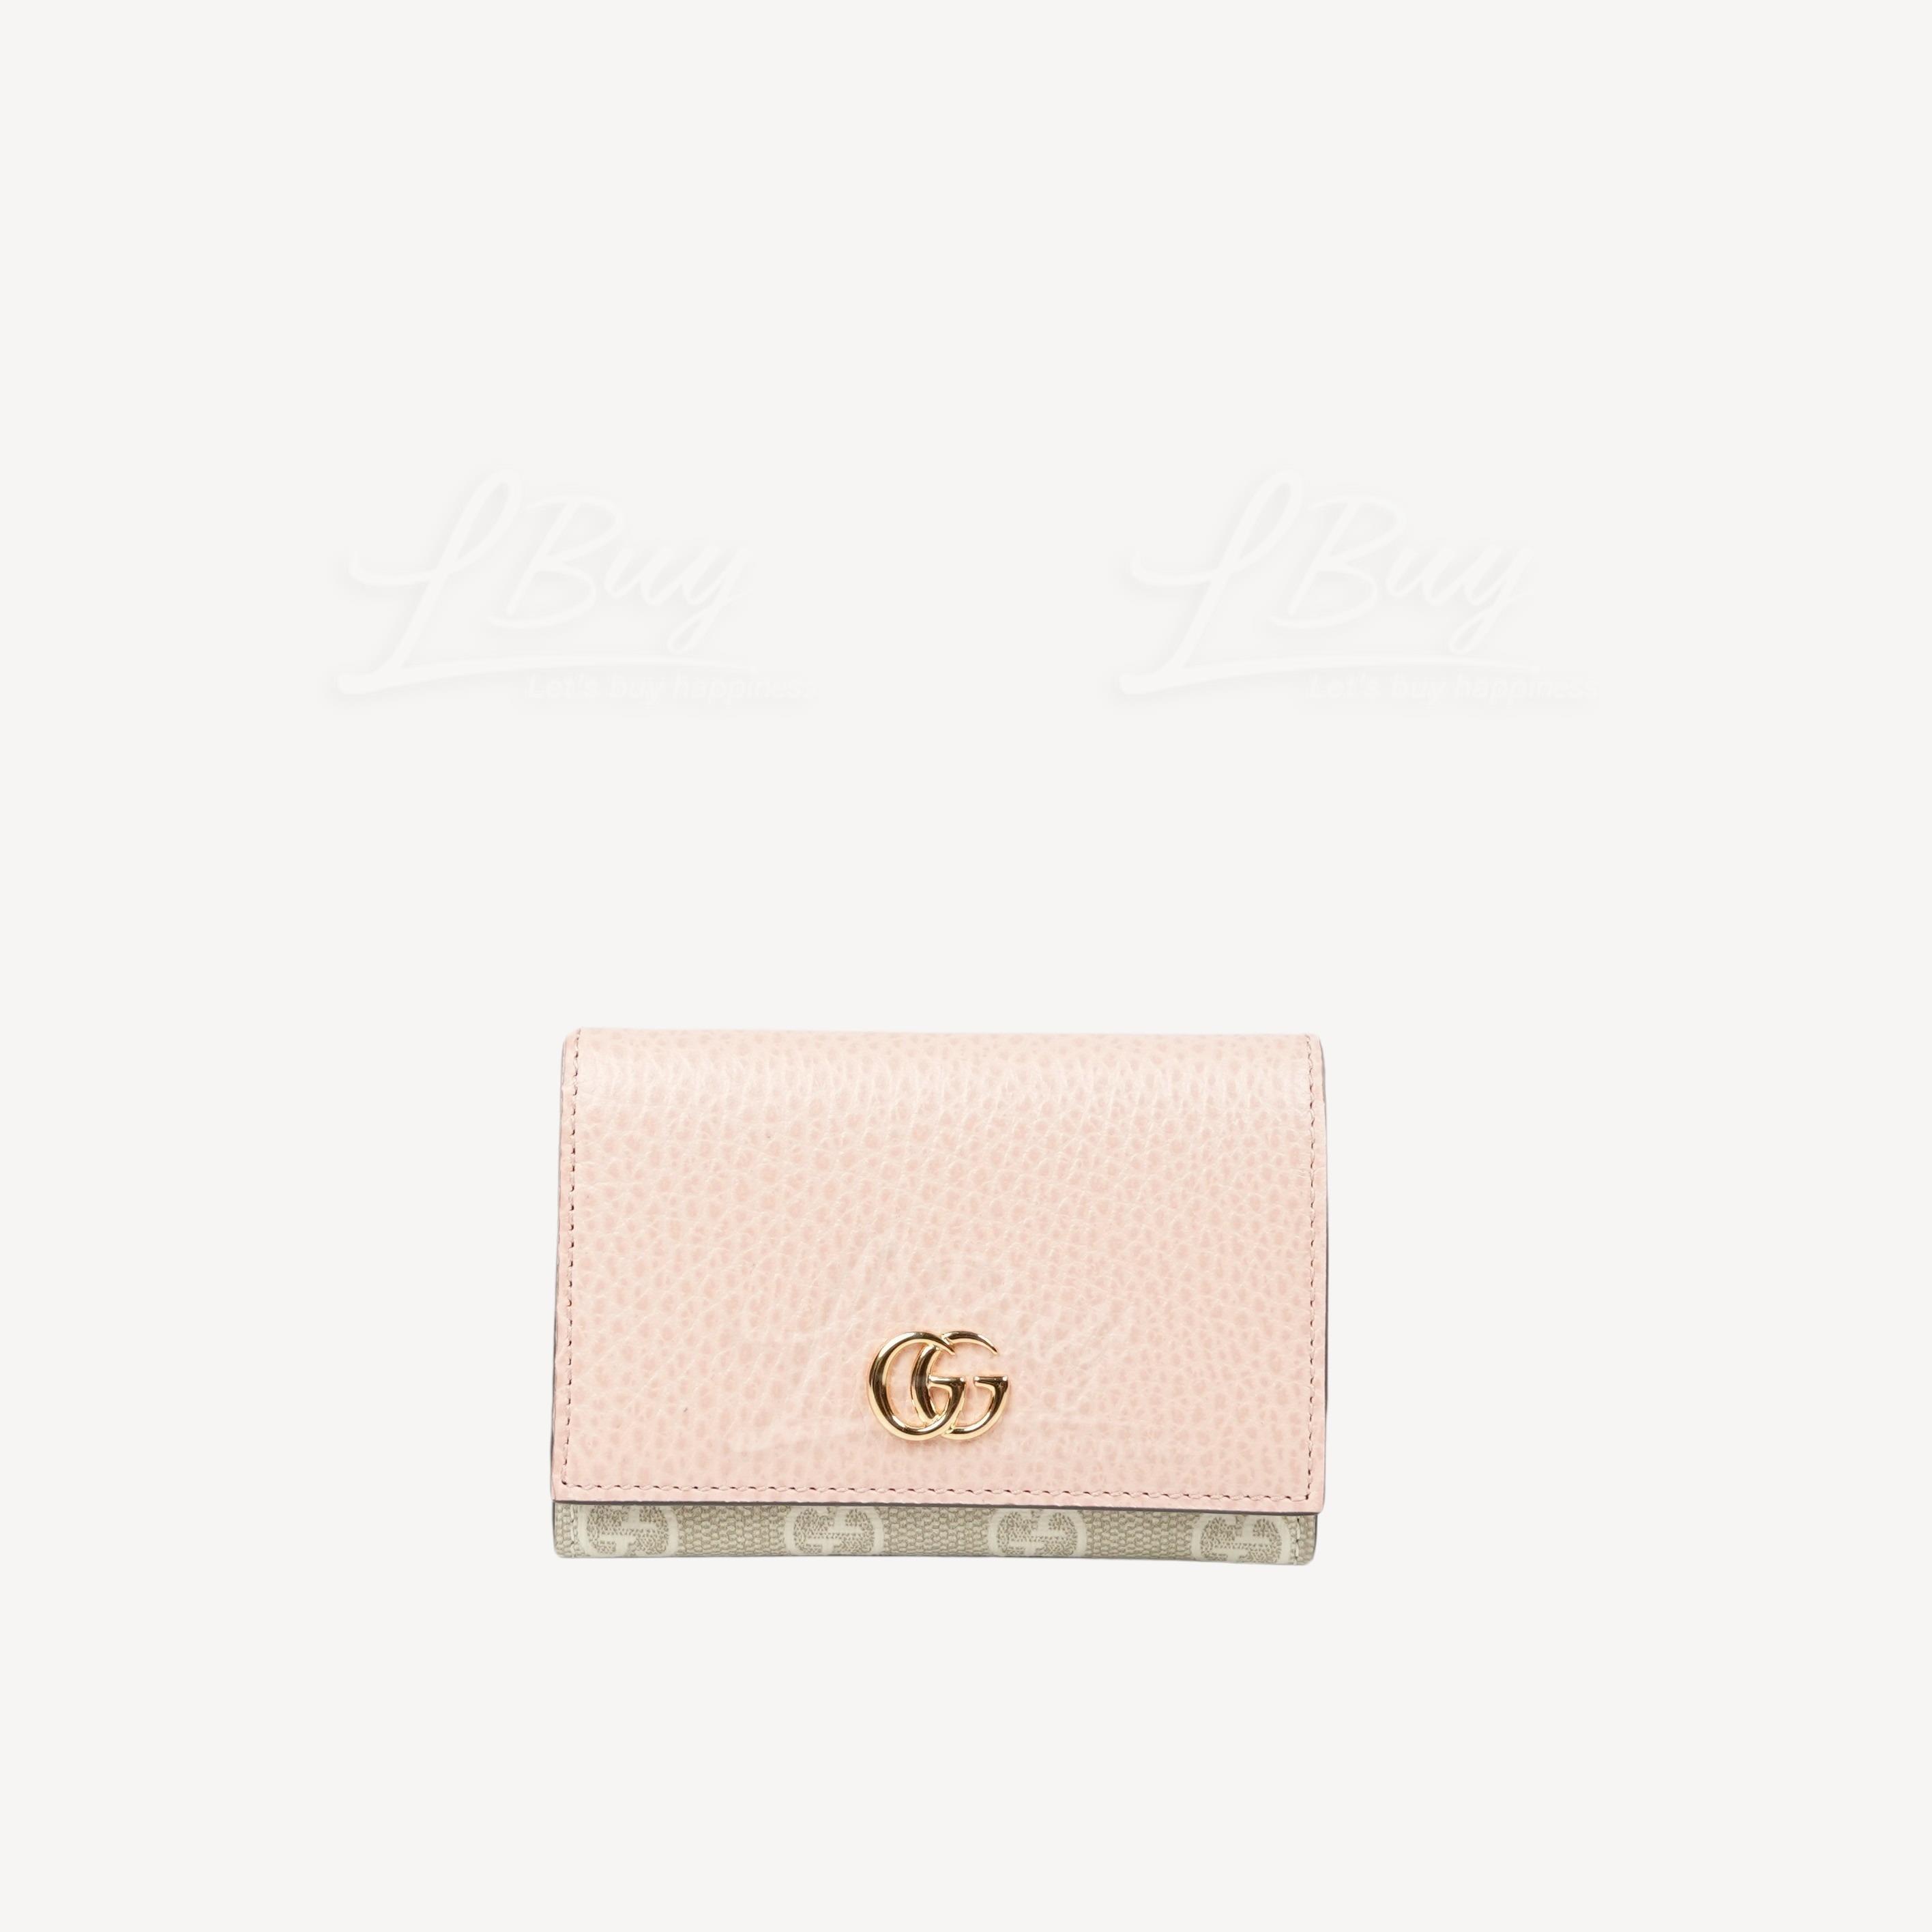 Gucci GG Logo MARMONT皮革卡片包 浅粉色 739525